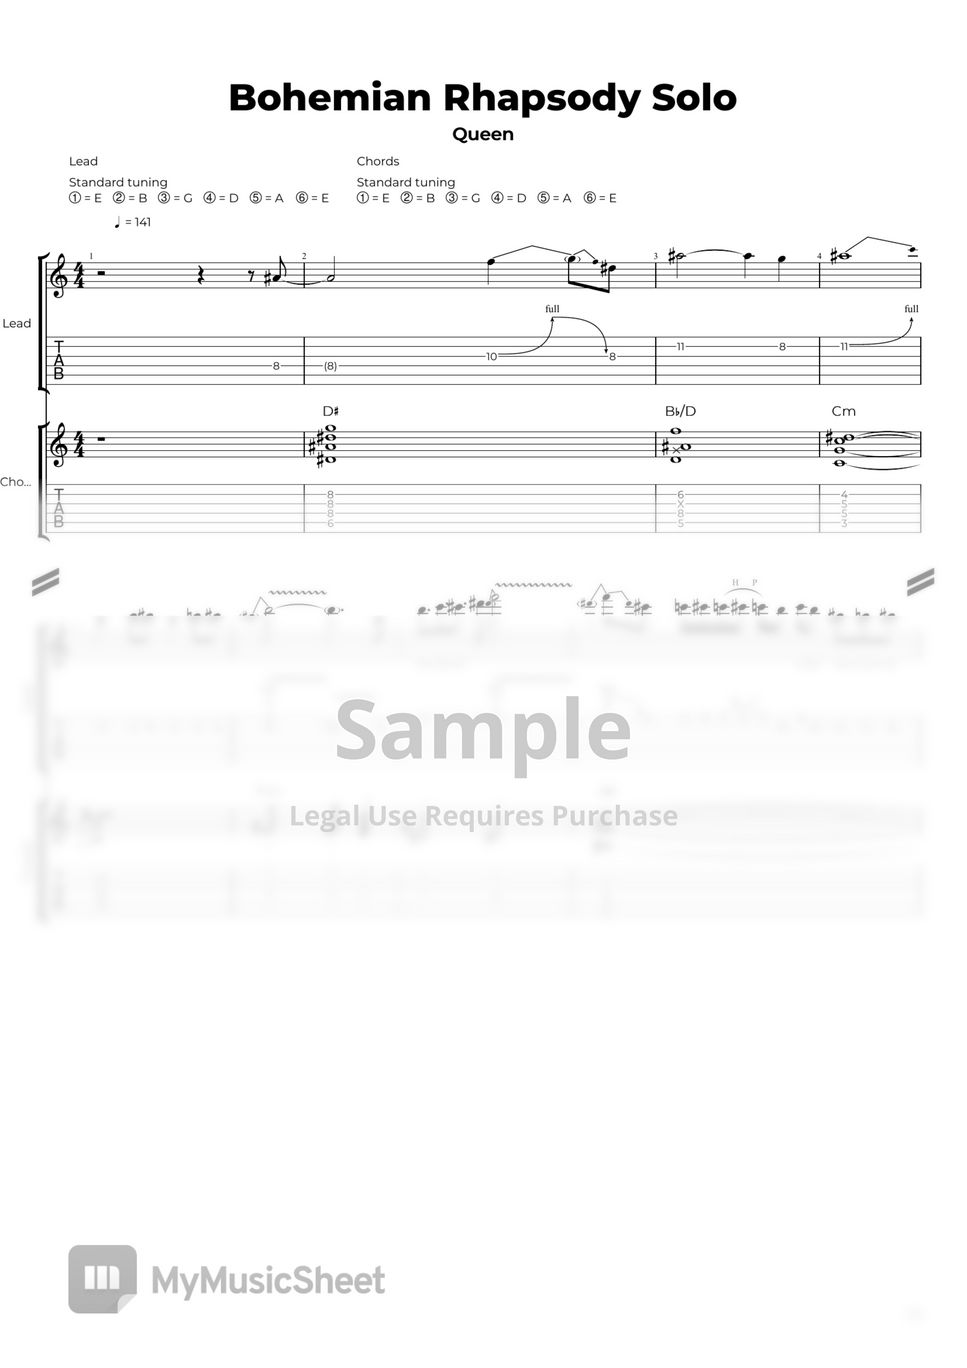 Queen - Bohemian Rhapsody Solo 楽譜 by Nikola Gugoski